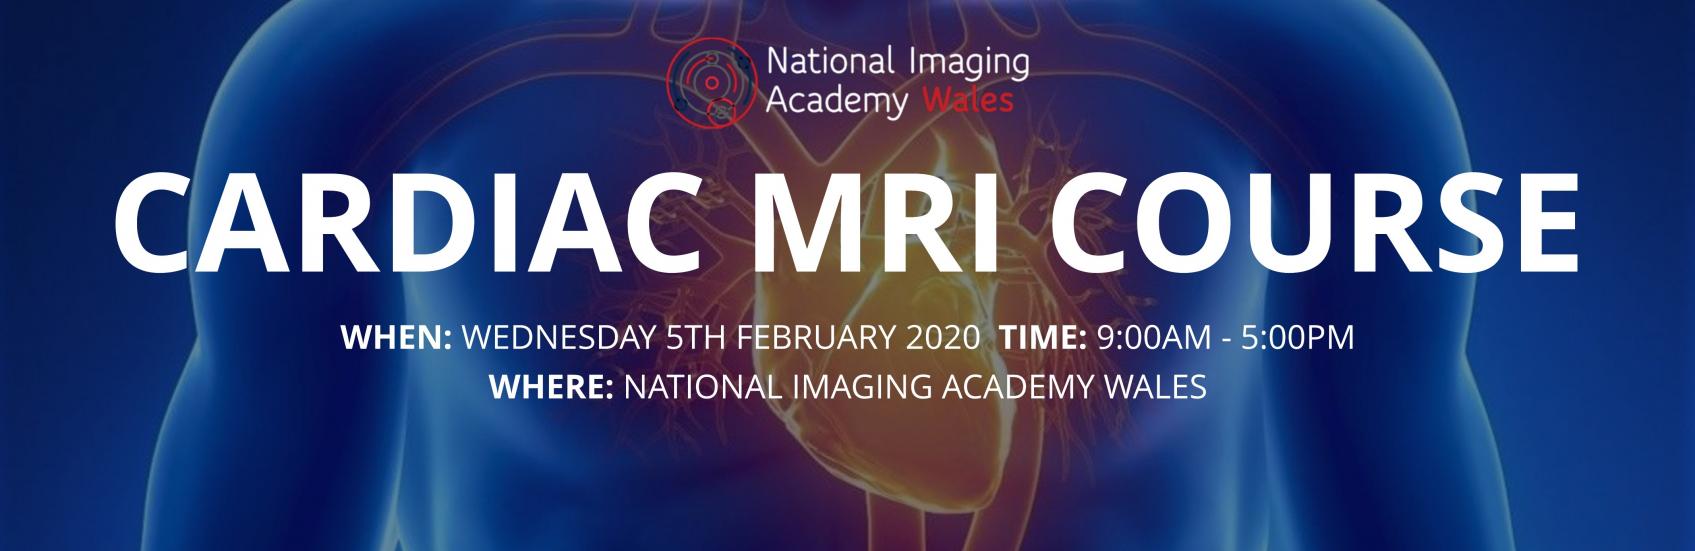 Cardiac MRI Course Imaging Academy Wales